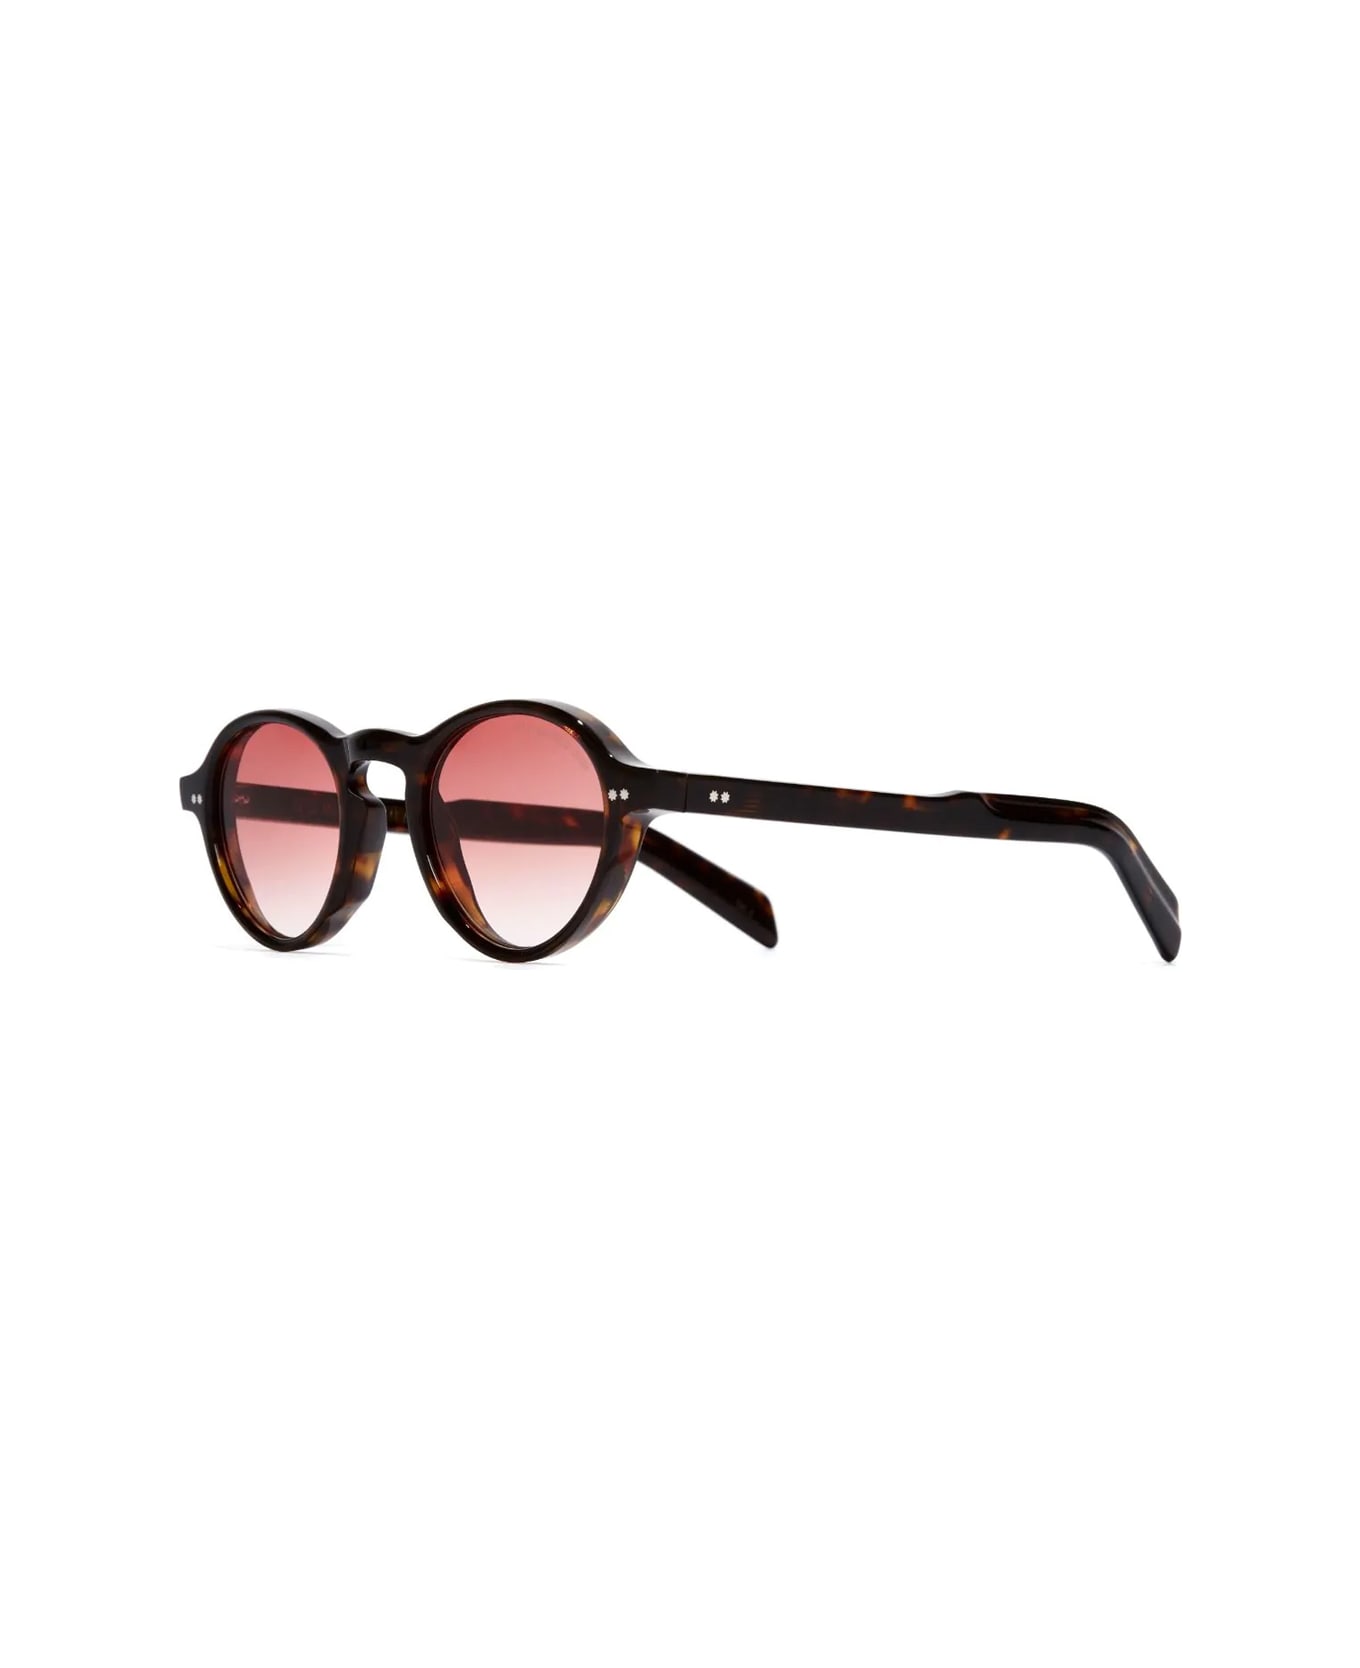 Cutler and Gross Gr08 03 Havana Sunglasses - Marrone サングラス